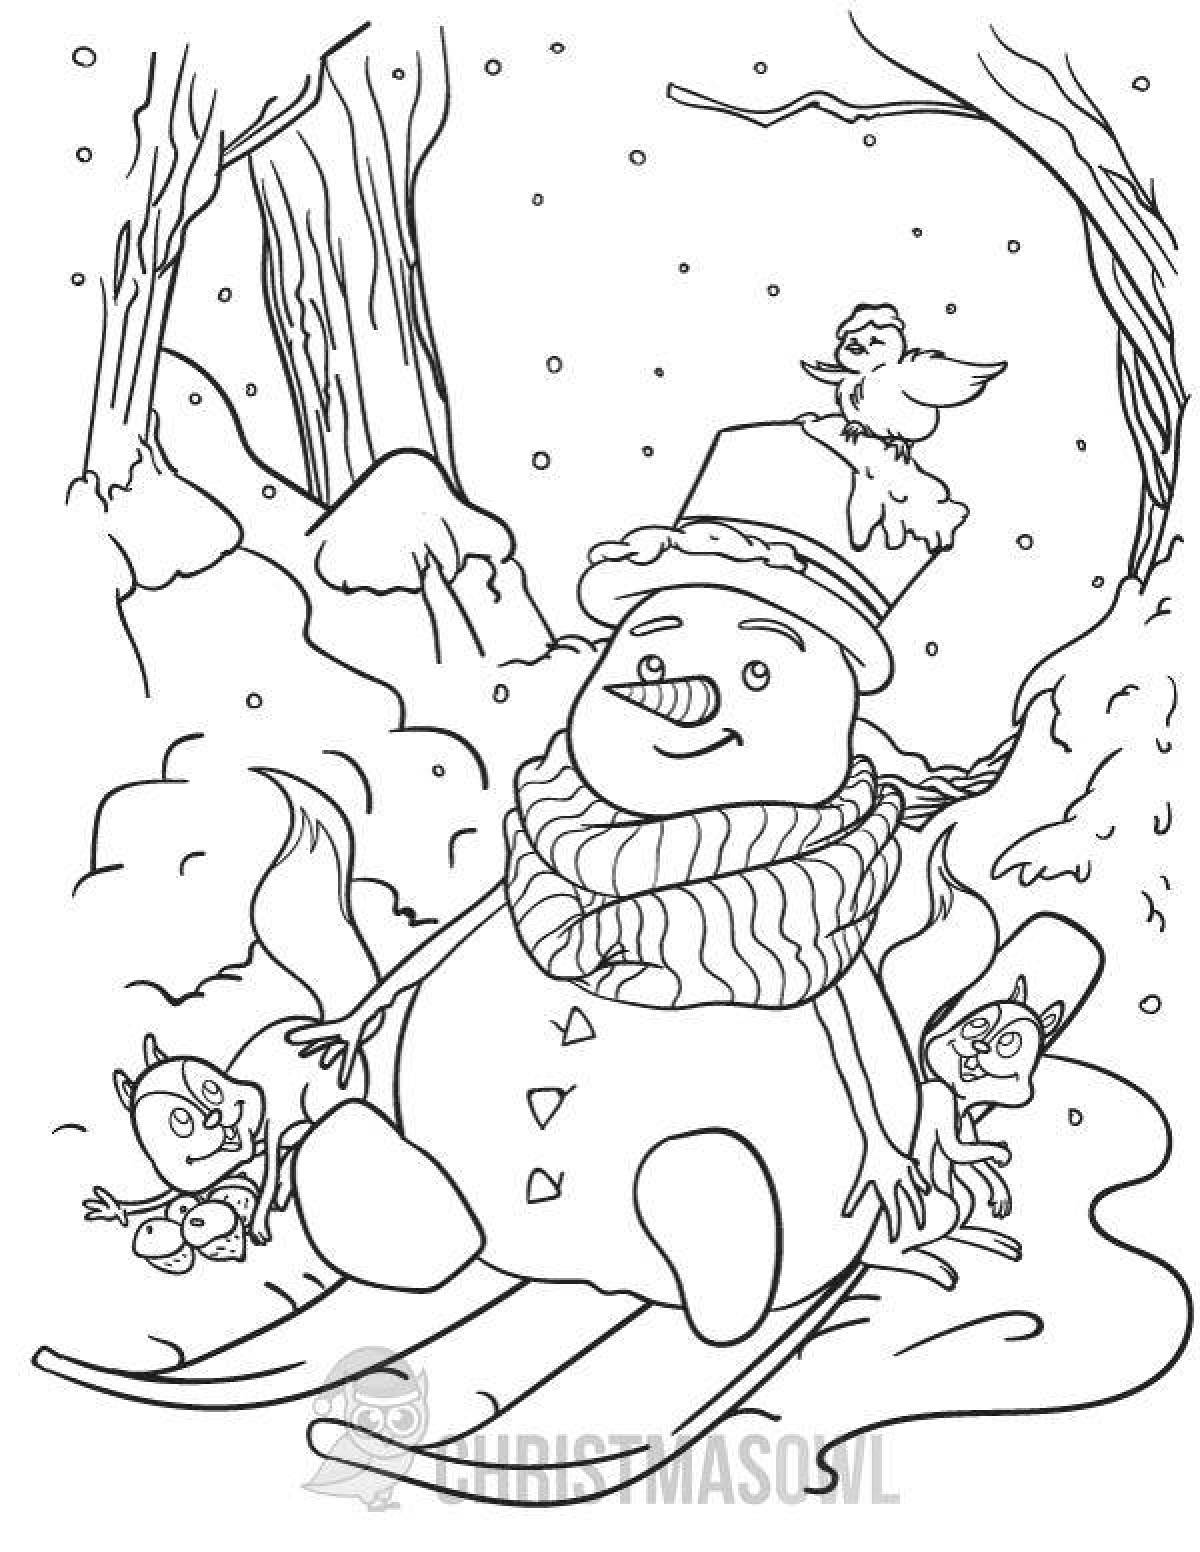 Snowman on skis #6